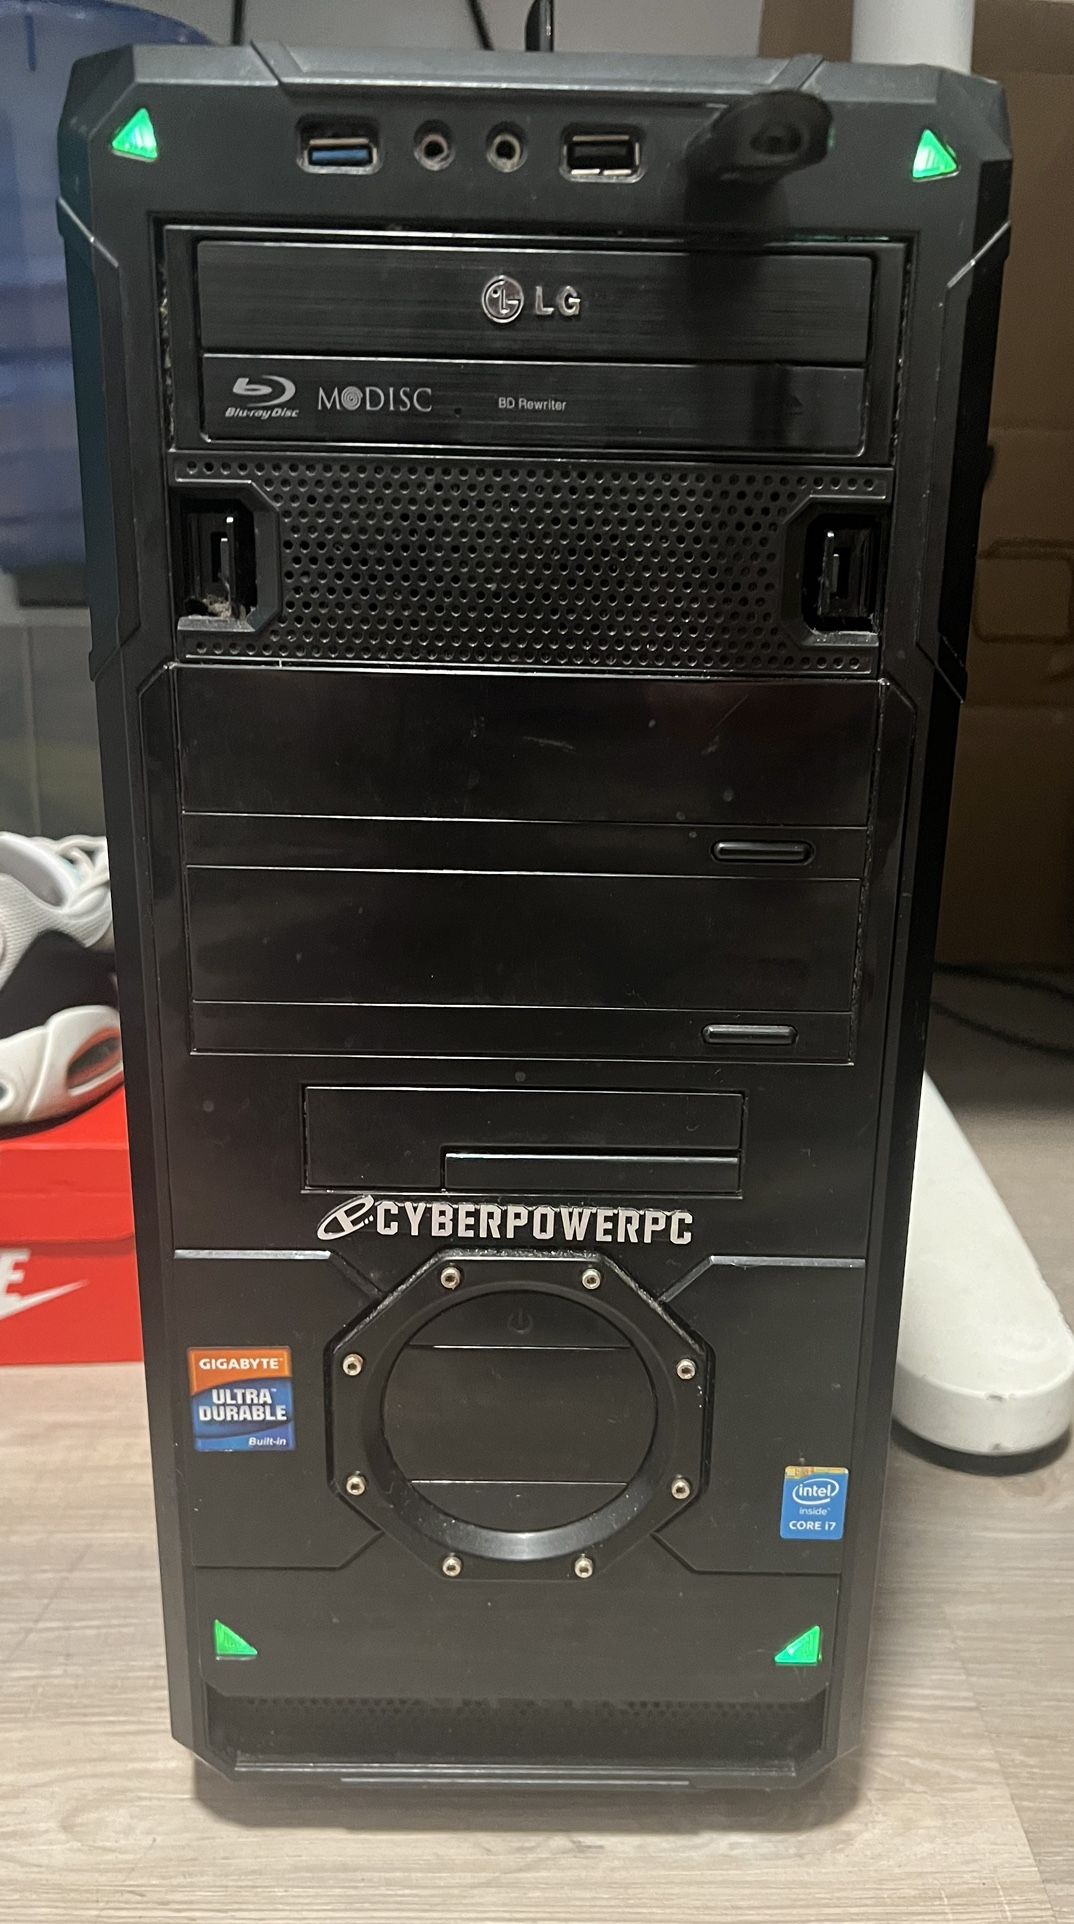 CyberPower PC